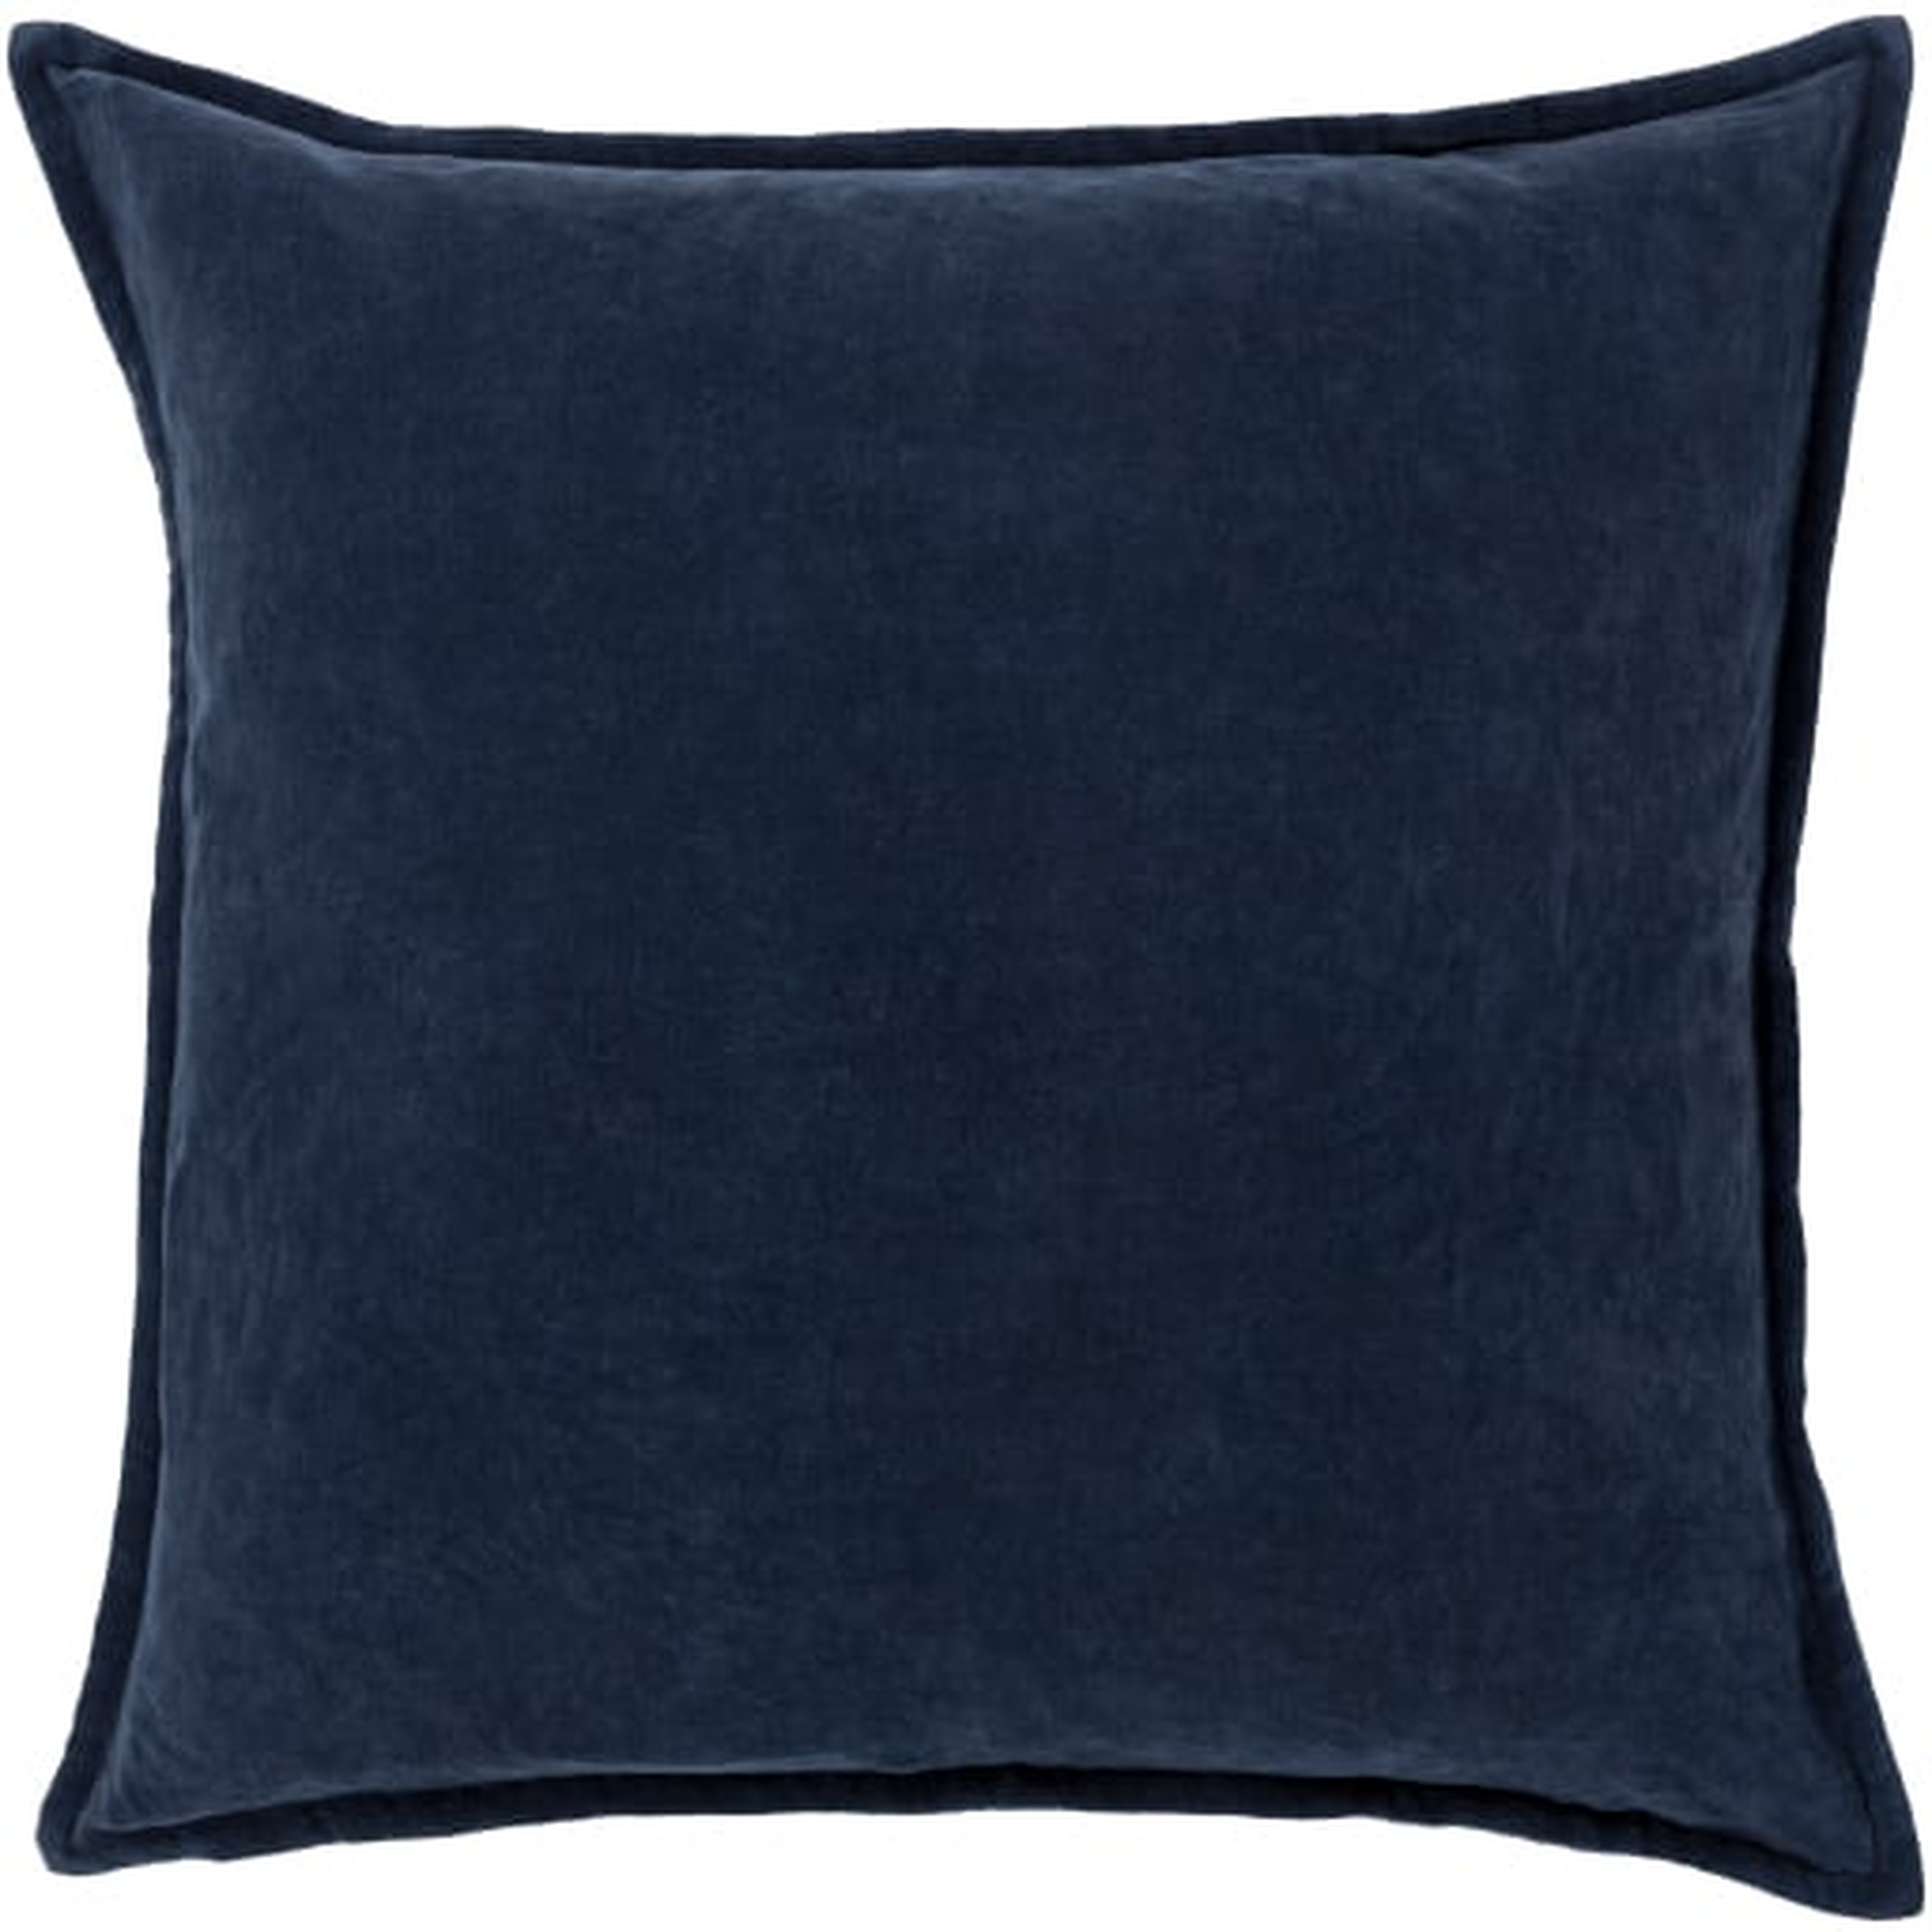 Cotton Velvet Pillow with Polyester Insert, Navy, 20'' x 20'' - Surya